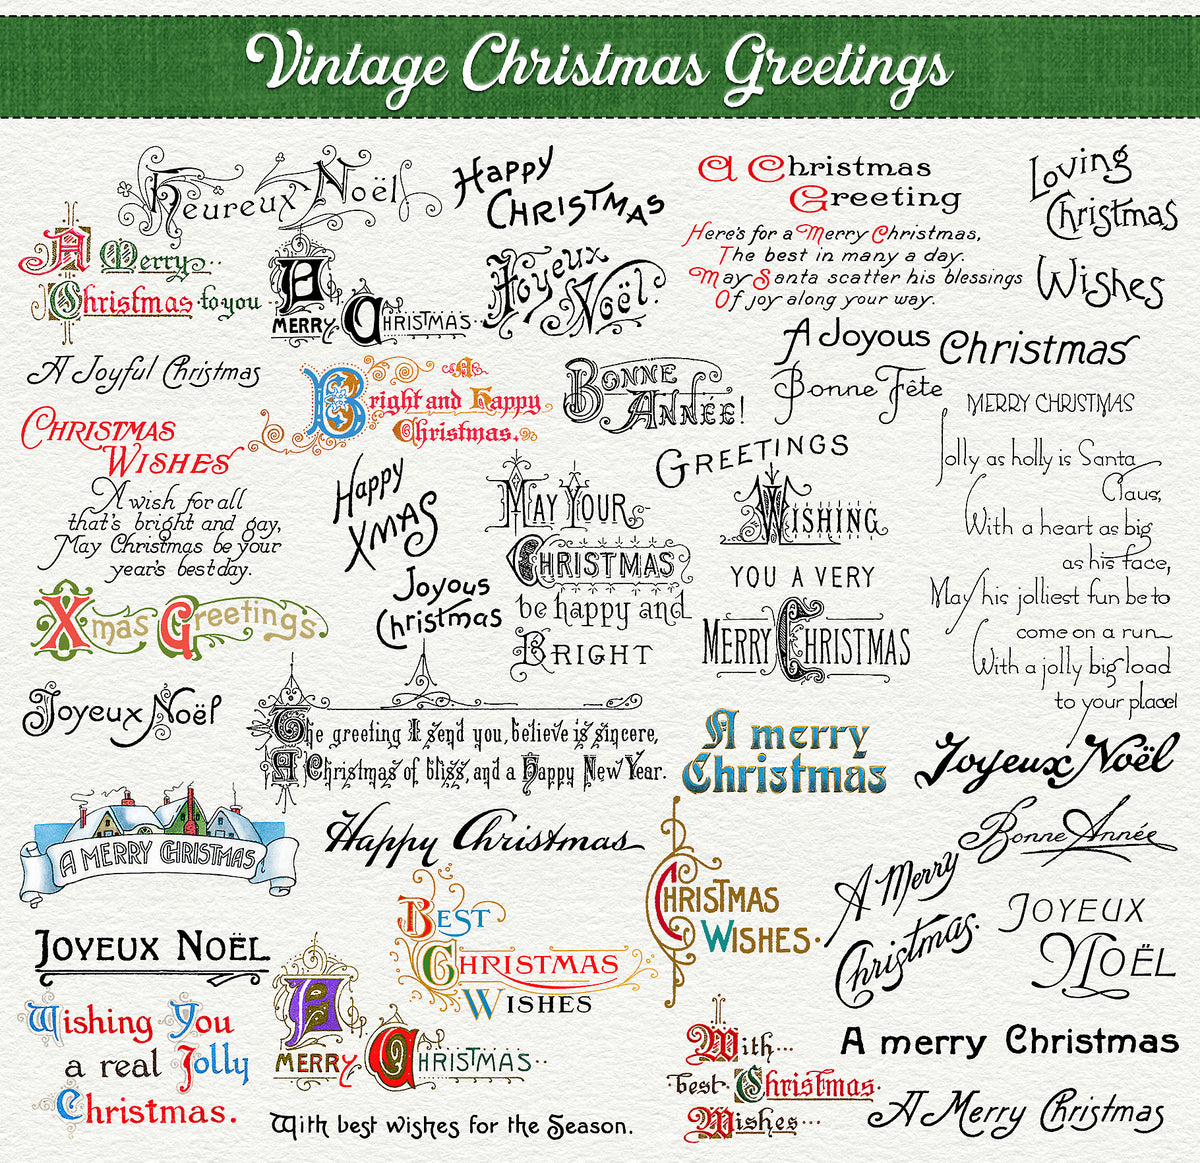 Vintage Christmas greetings digital graphics.